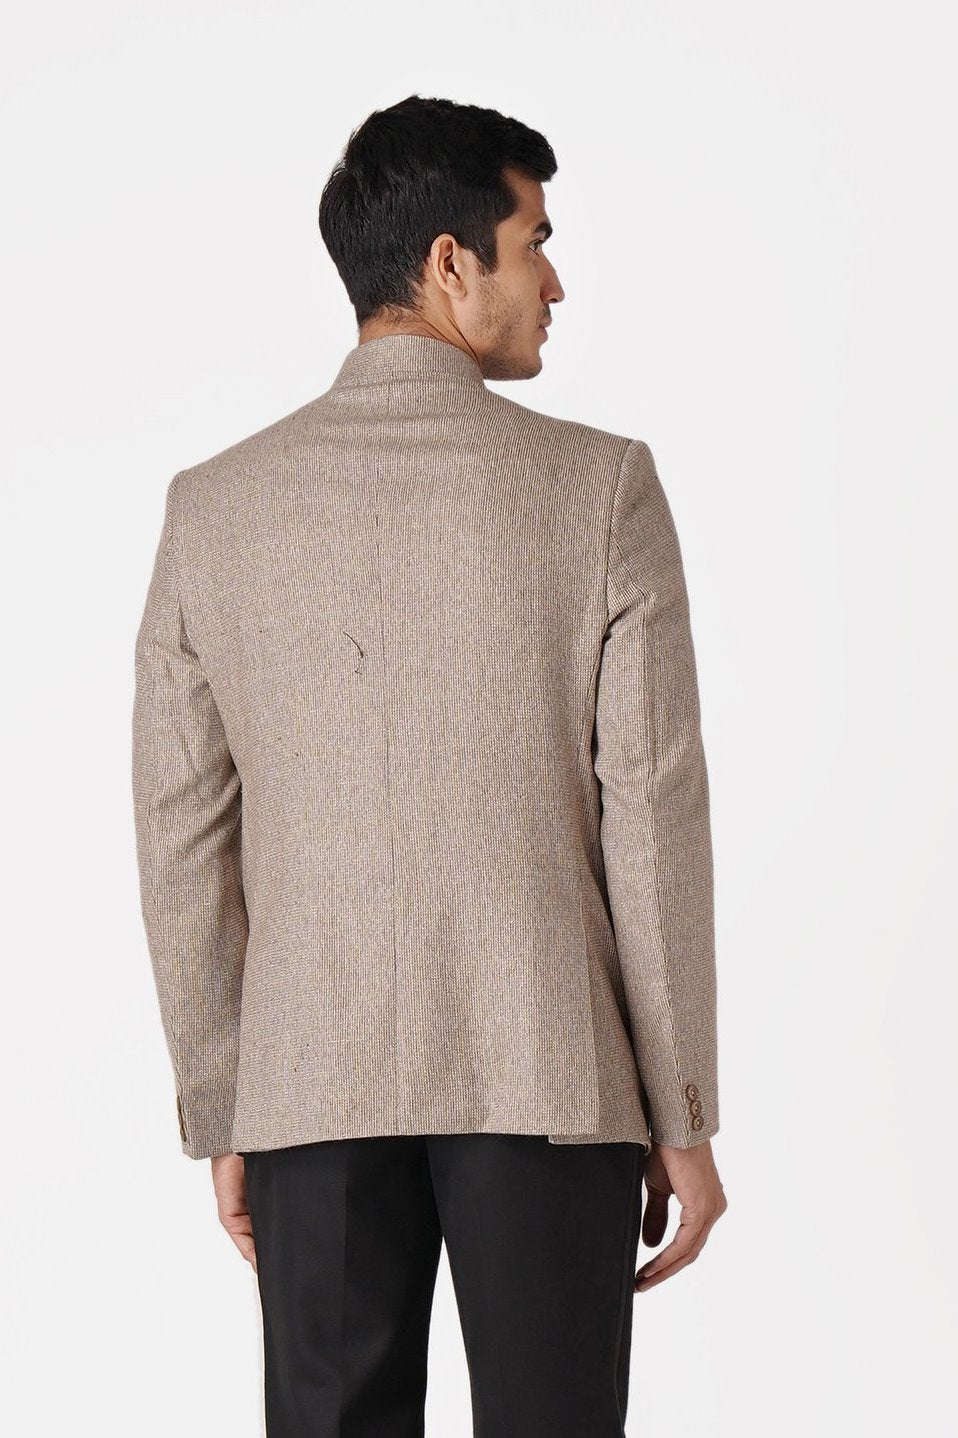 Wintage Men's Tweed Casual and Festive Blazer Coat Jacket: Beige